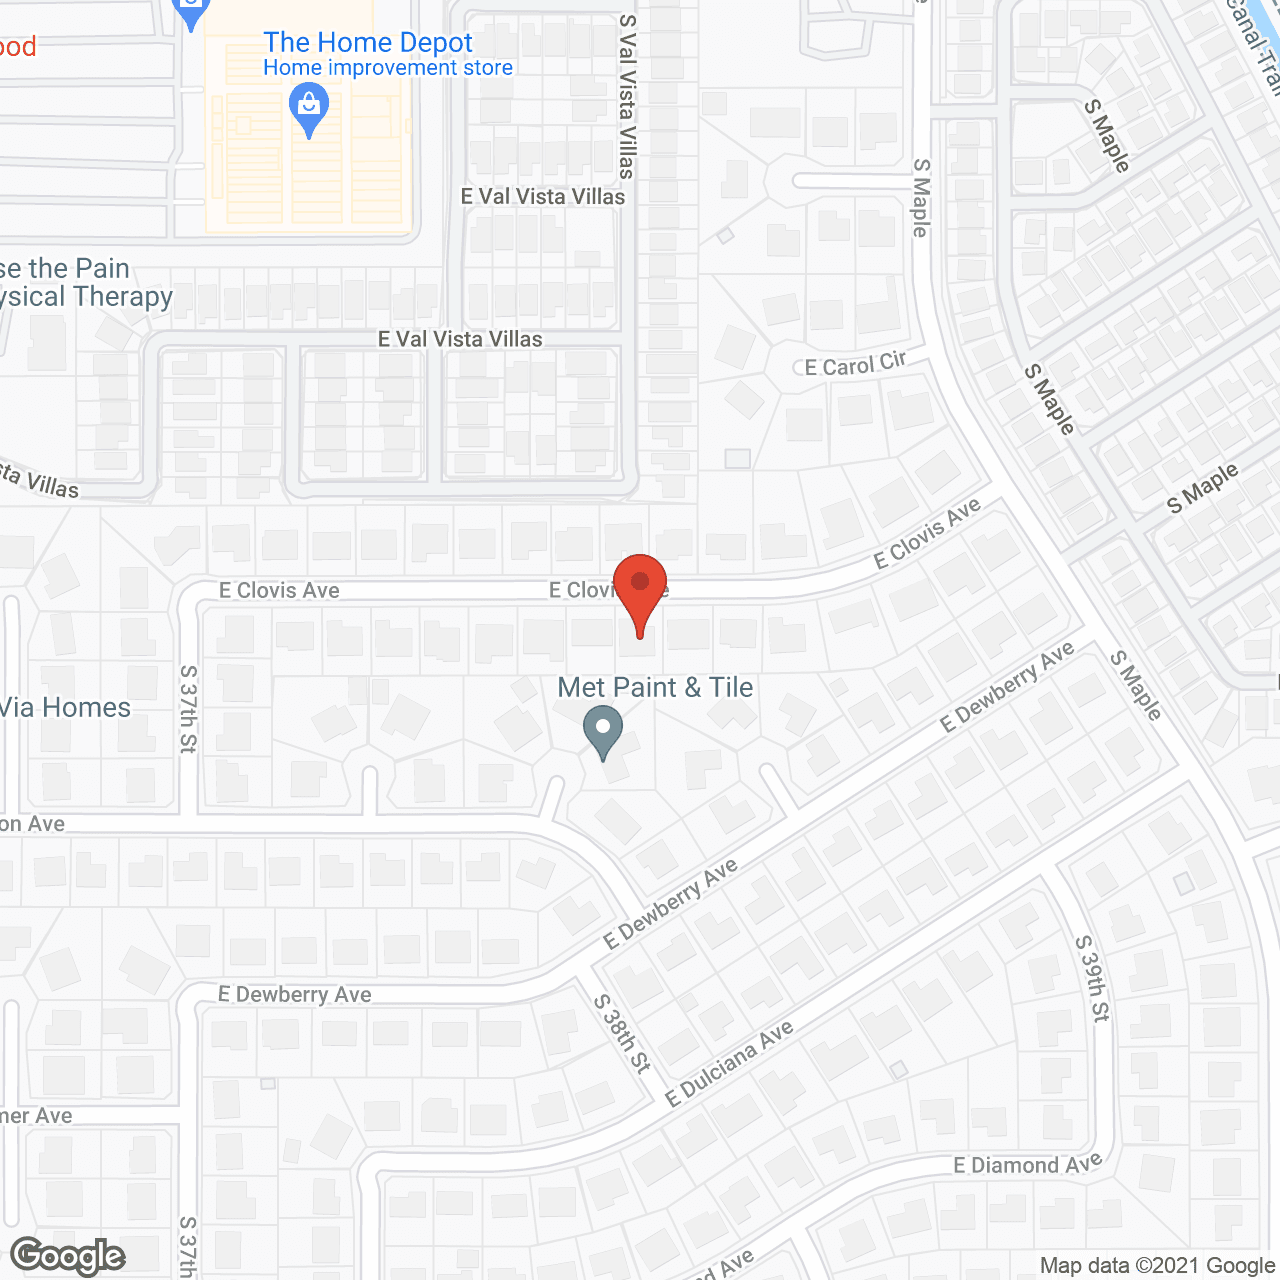 Sunrise Adult Care Center in google map